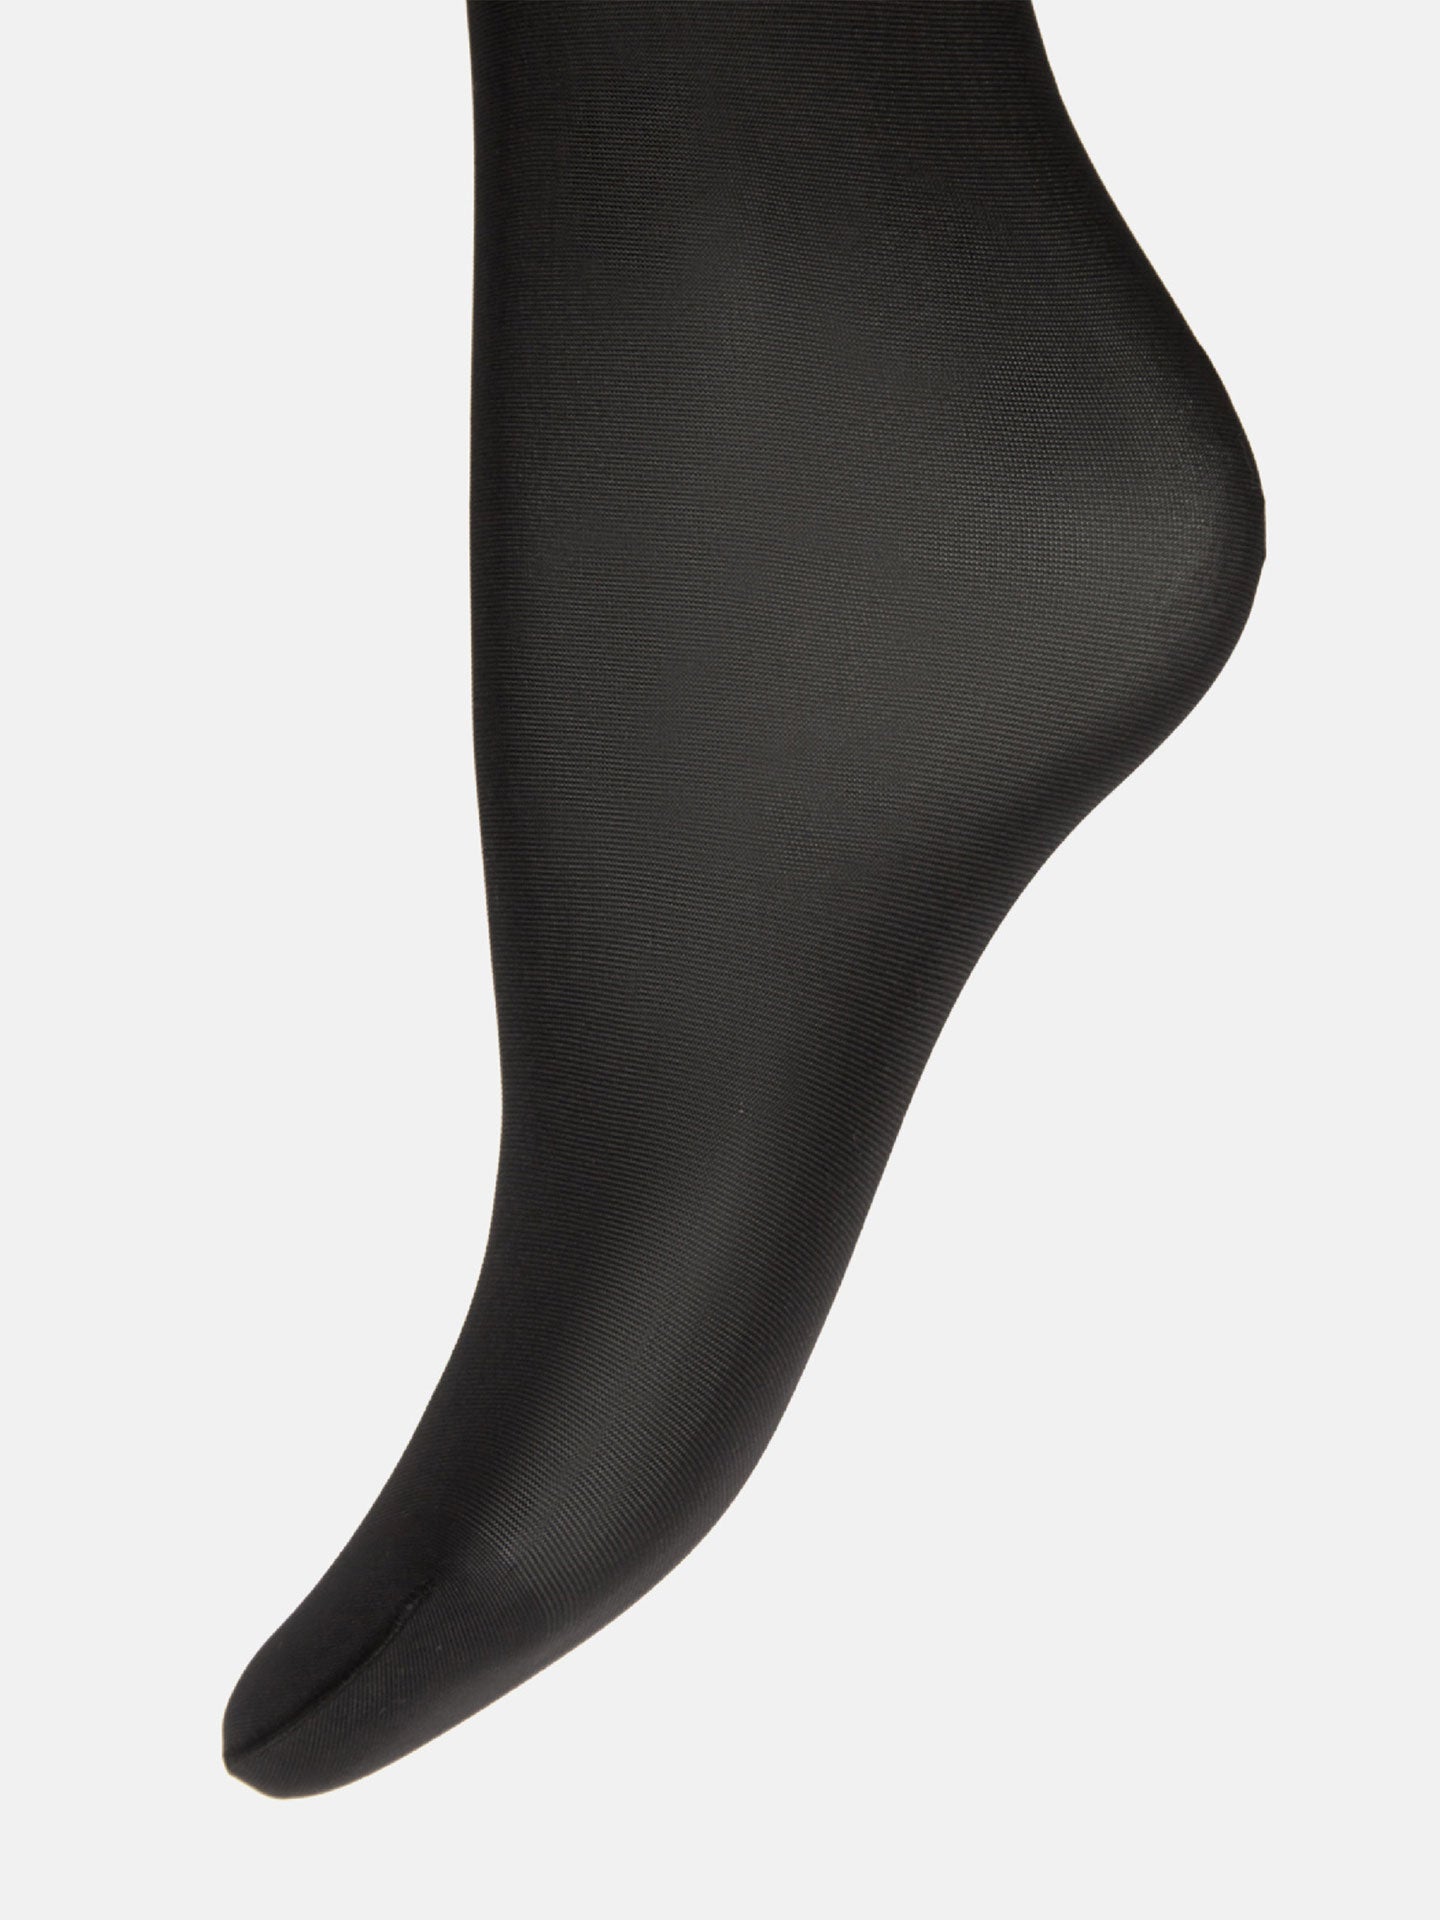 Wolford Synergy Leg Support Tighst 40DEN Black